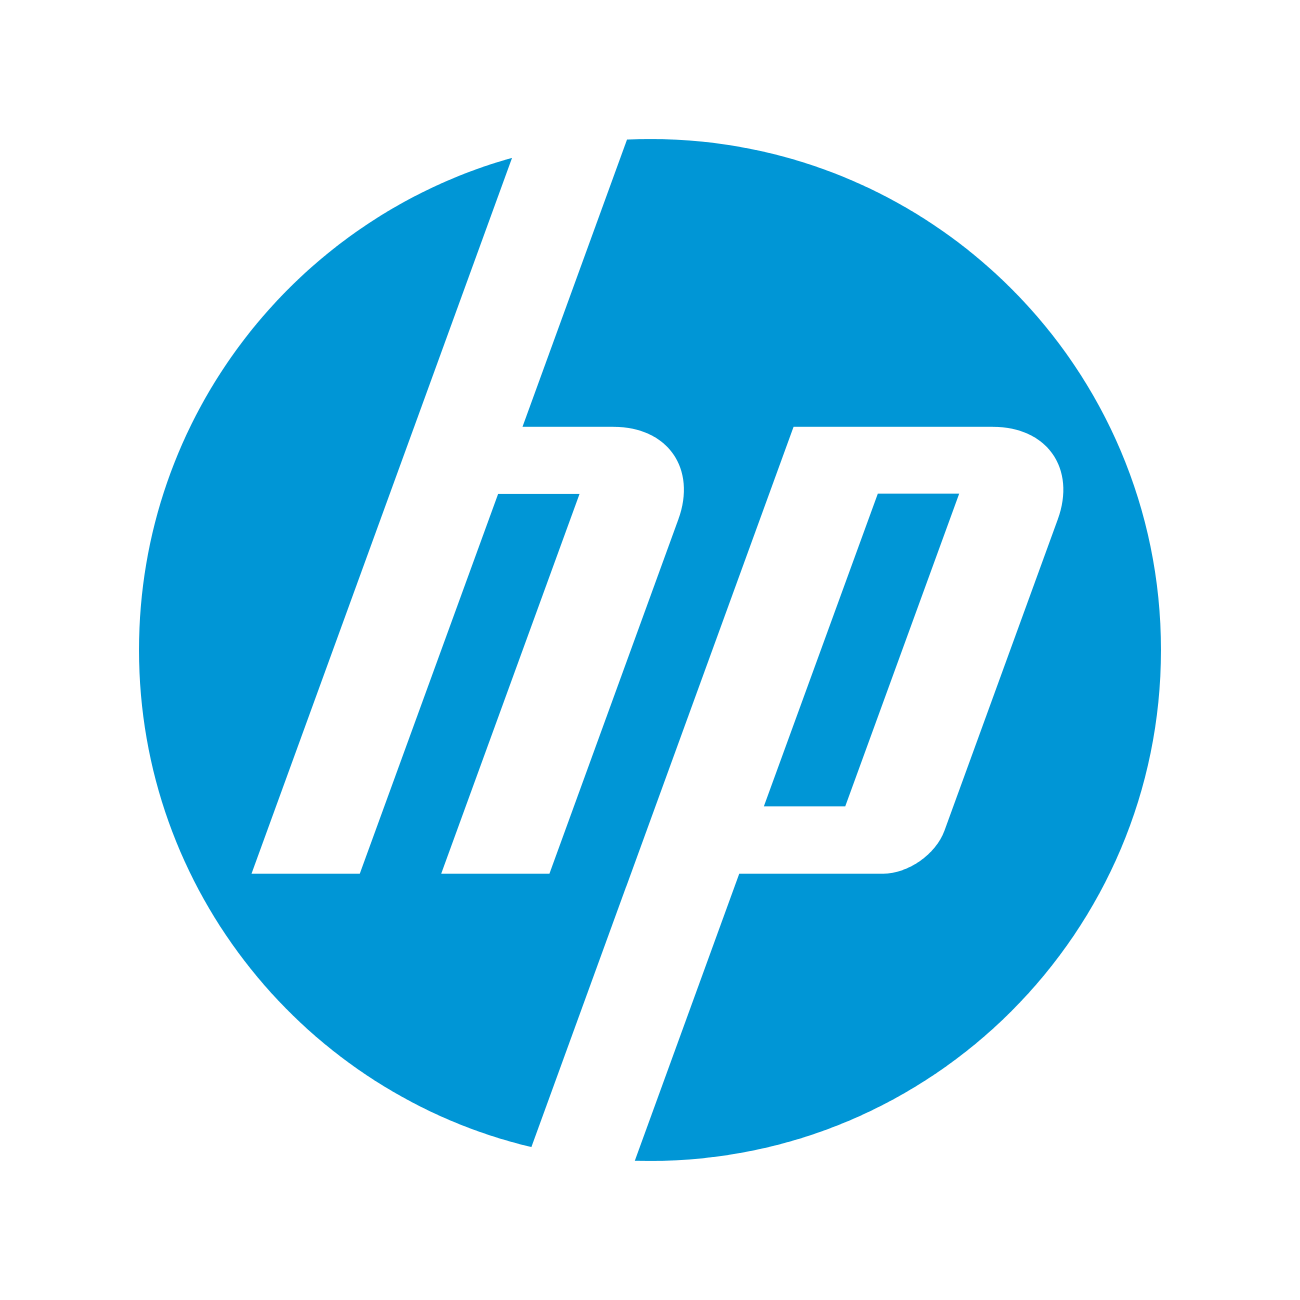 HP Standard Power Cord